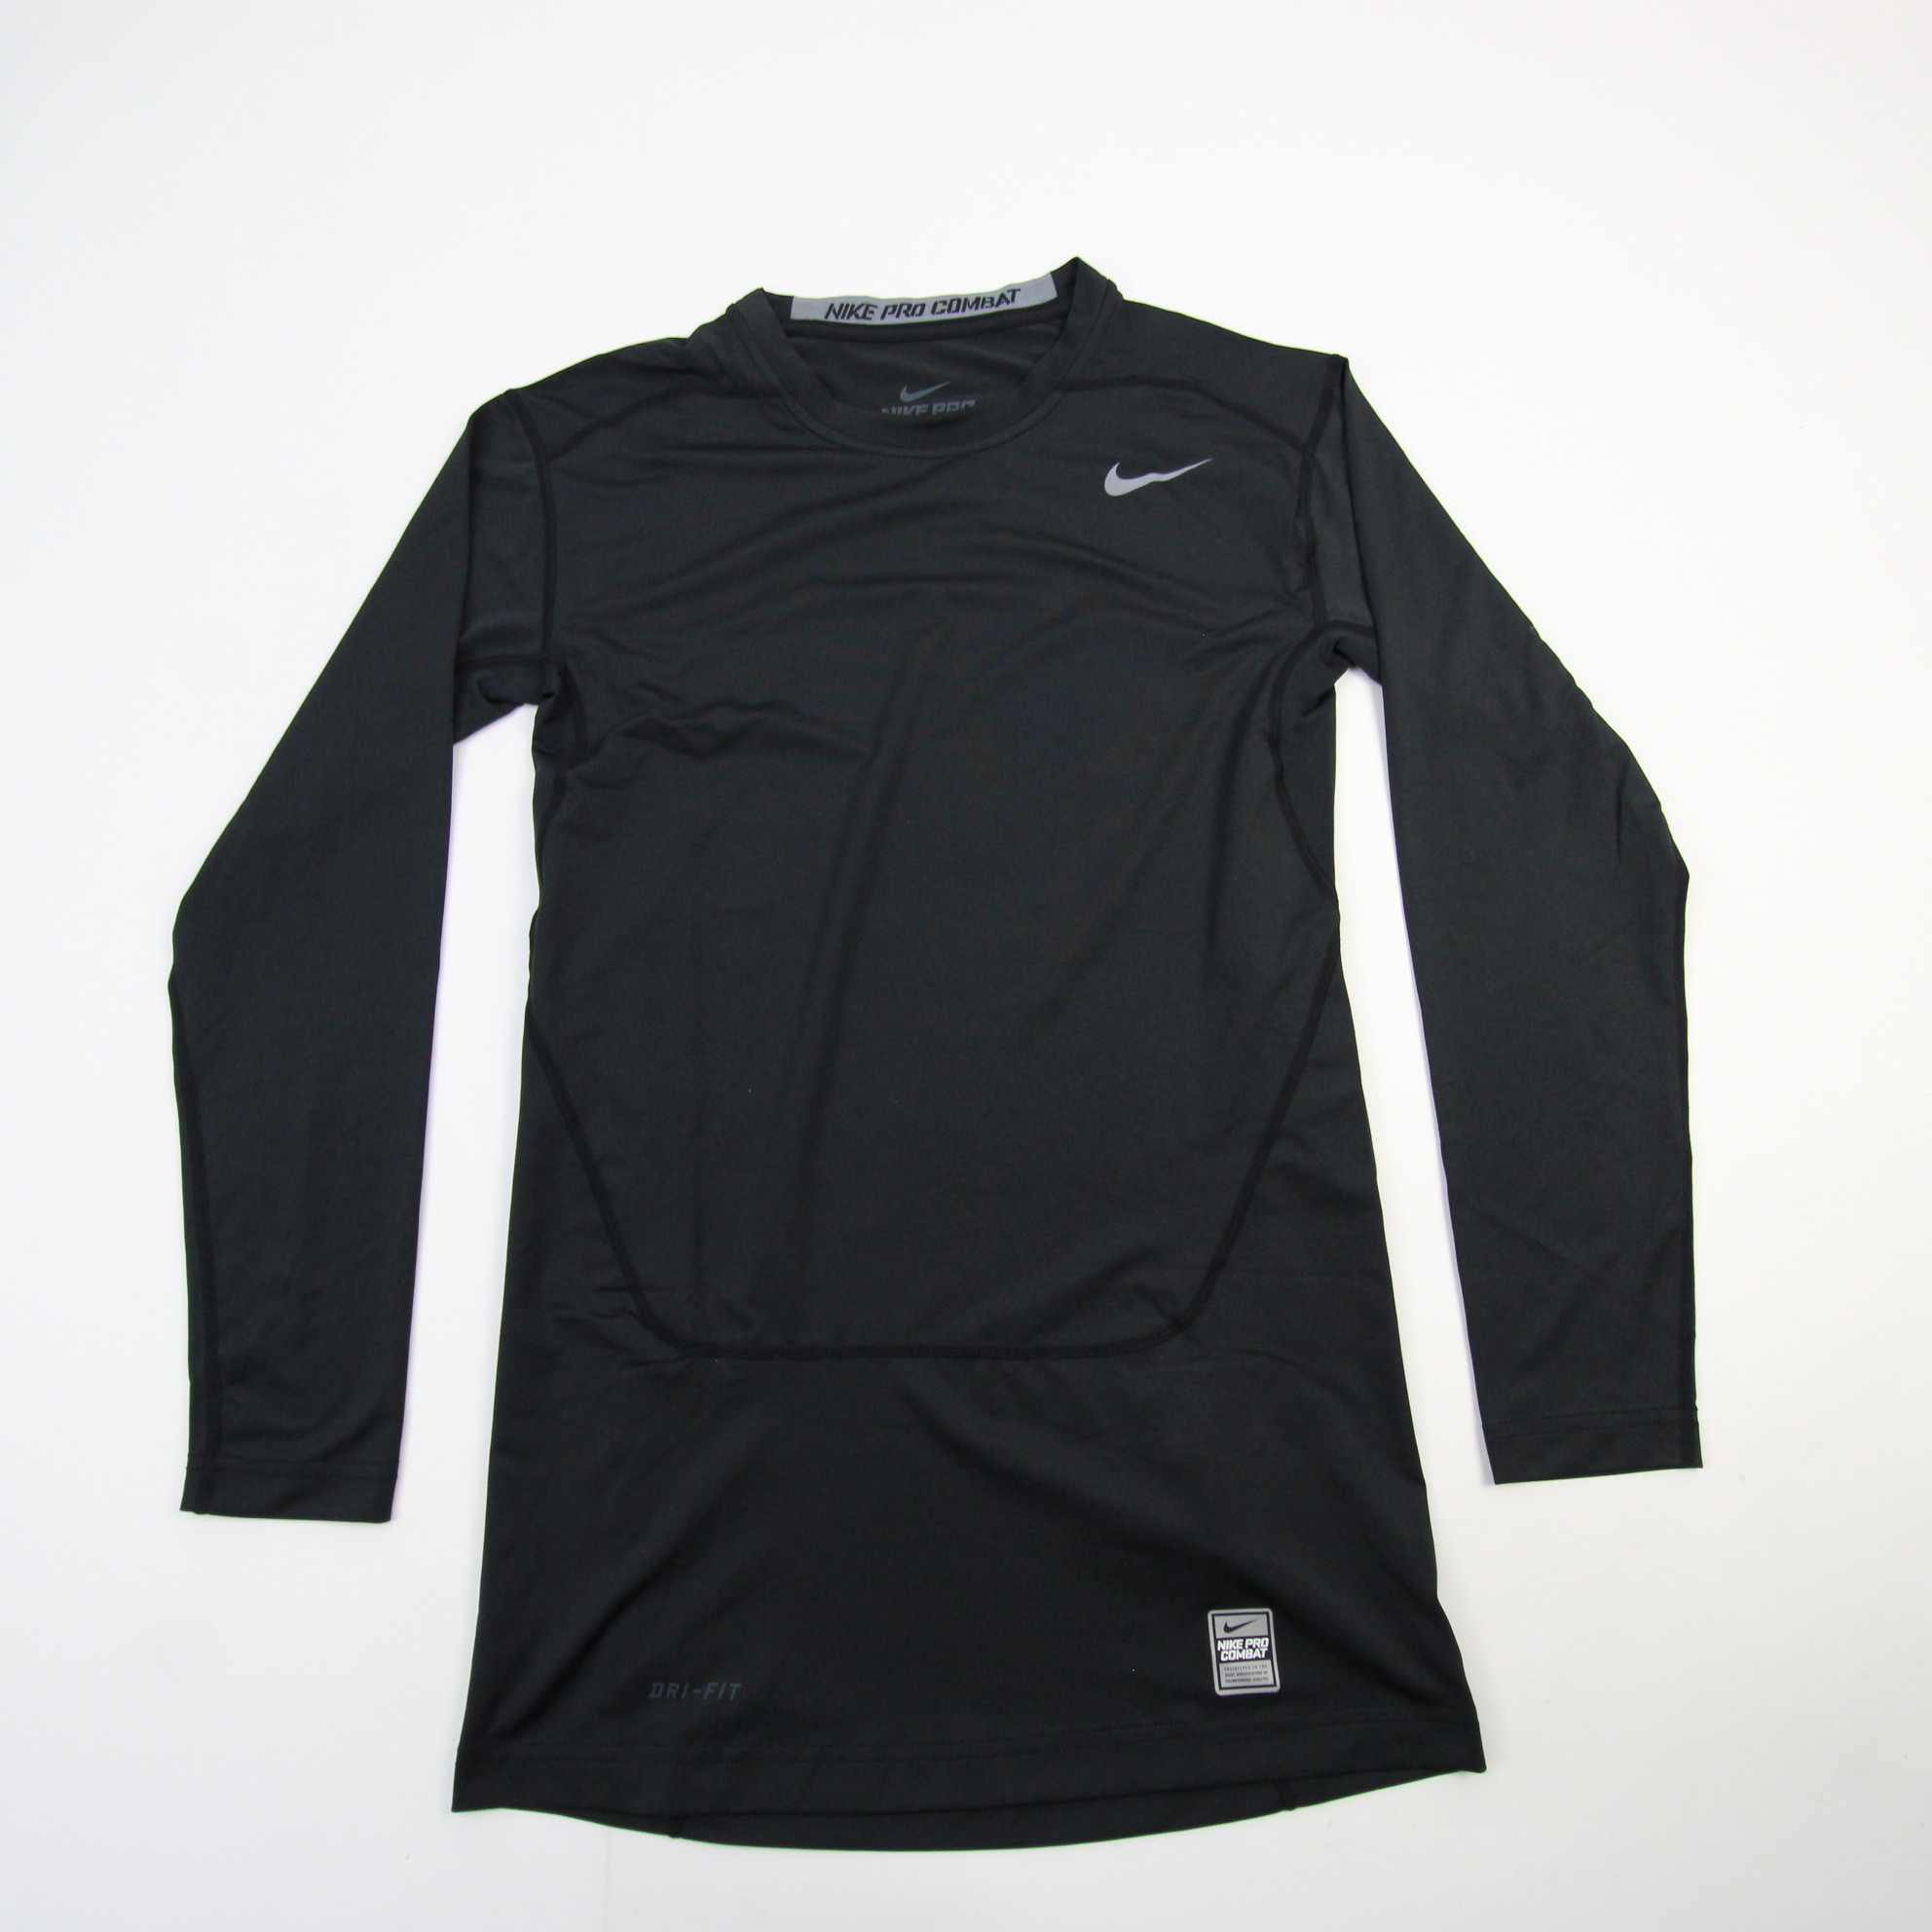 Nike Pro Combat Top Shirt Men's XL 2XL Black Stretch New with Tags – ASA